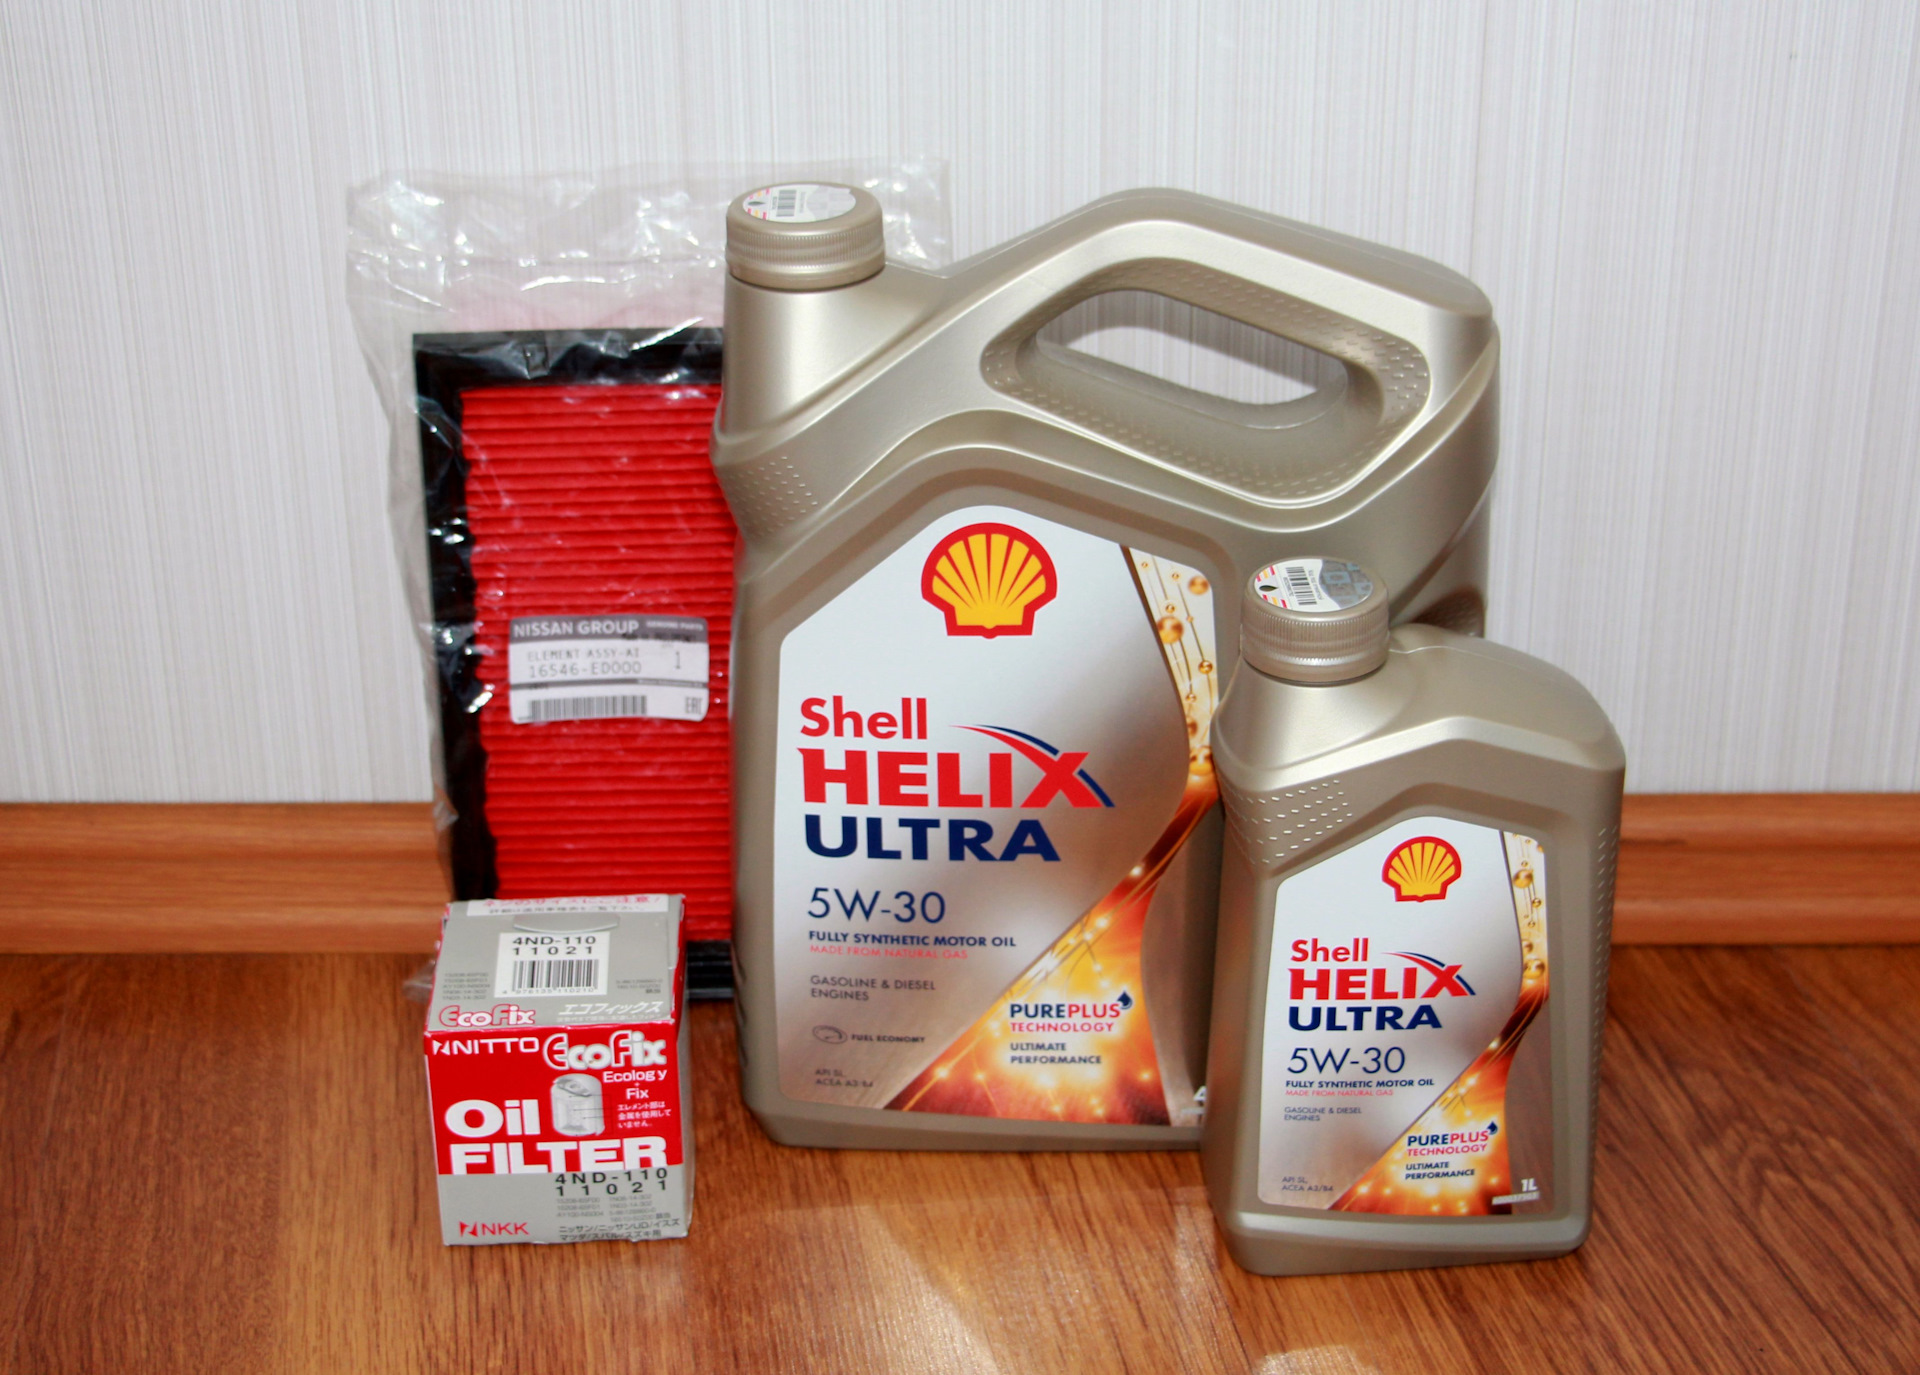 Shell ultra am l. Shell Helix Ultra 5w30 a3. 550046387 Helix Ultra 5w-30 4l. 550046383 Shell. Shell Helix Ultra professional am-l 5w-30.